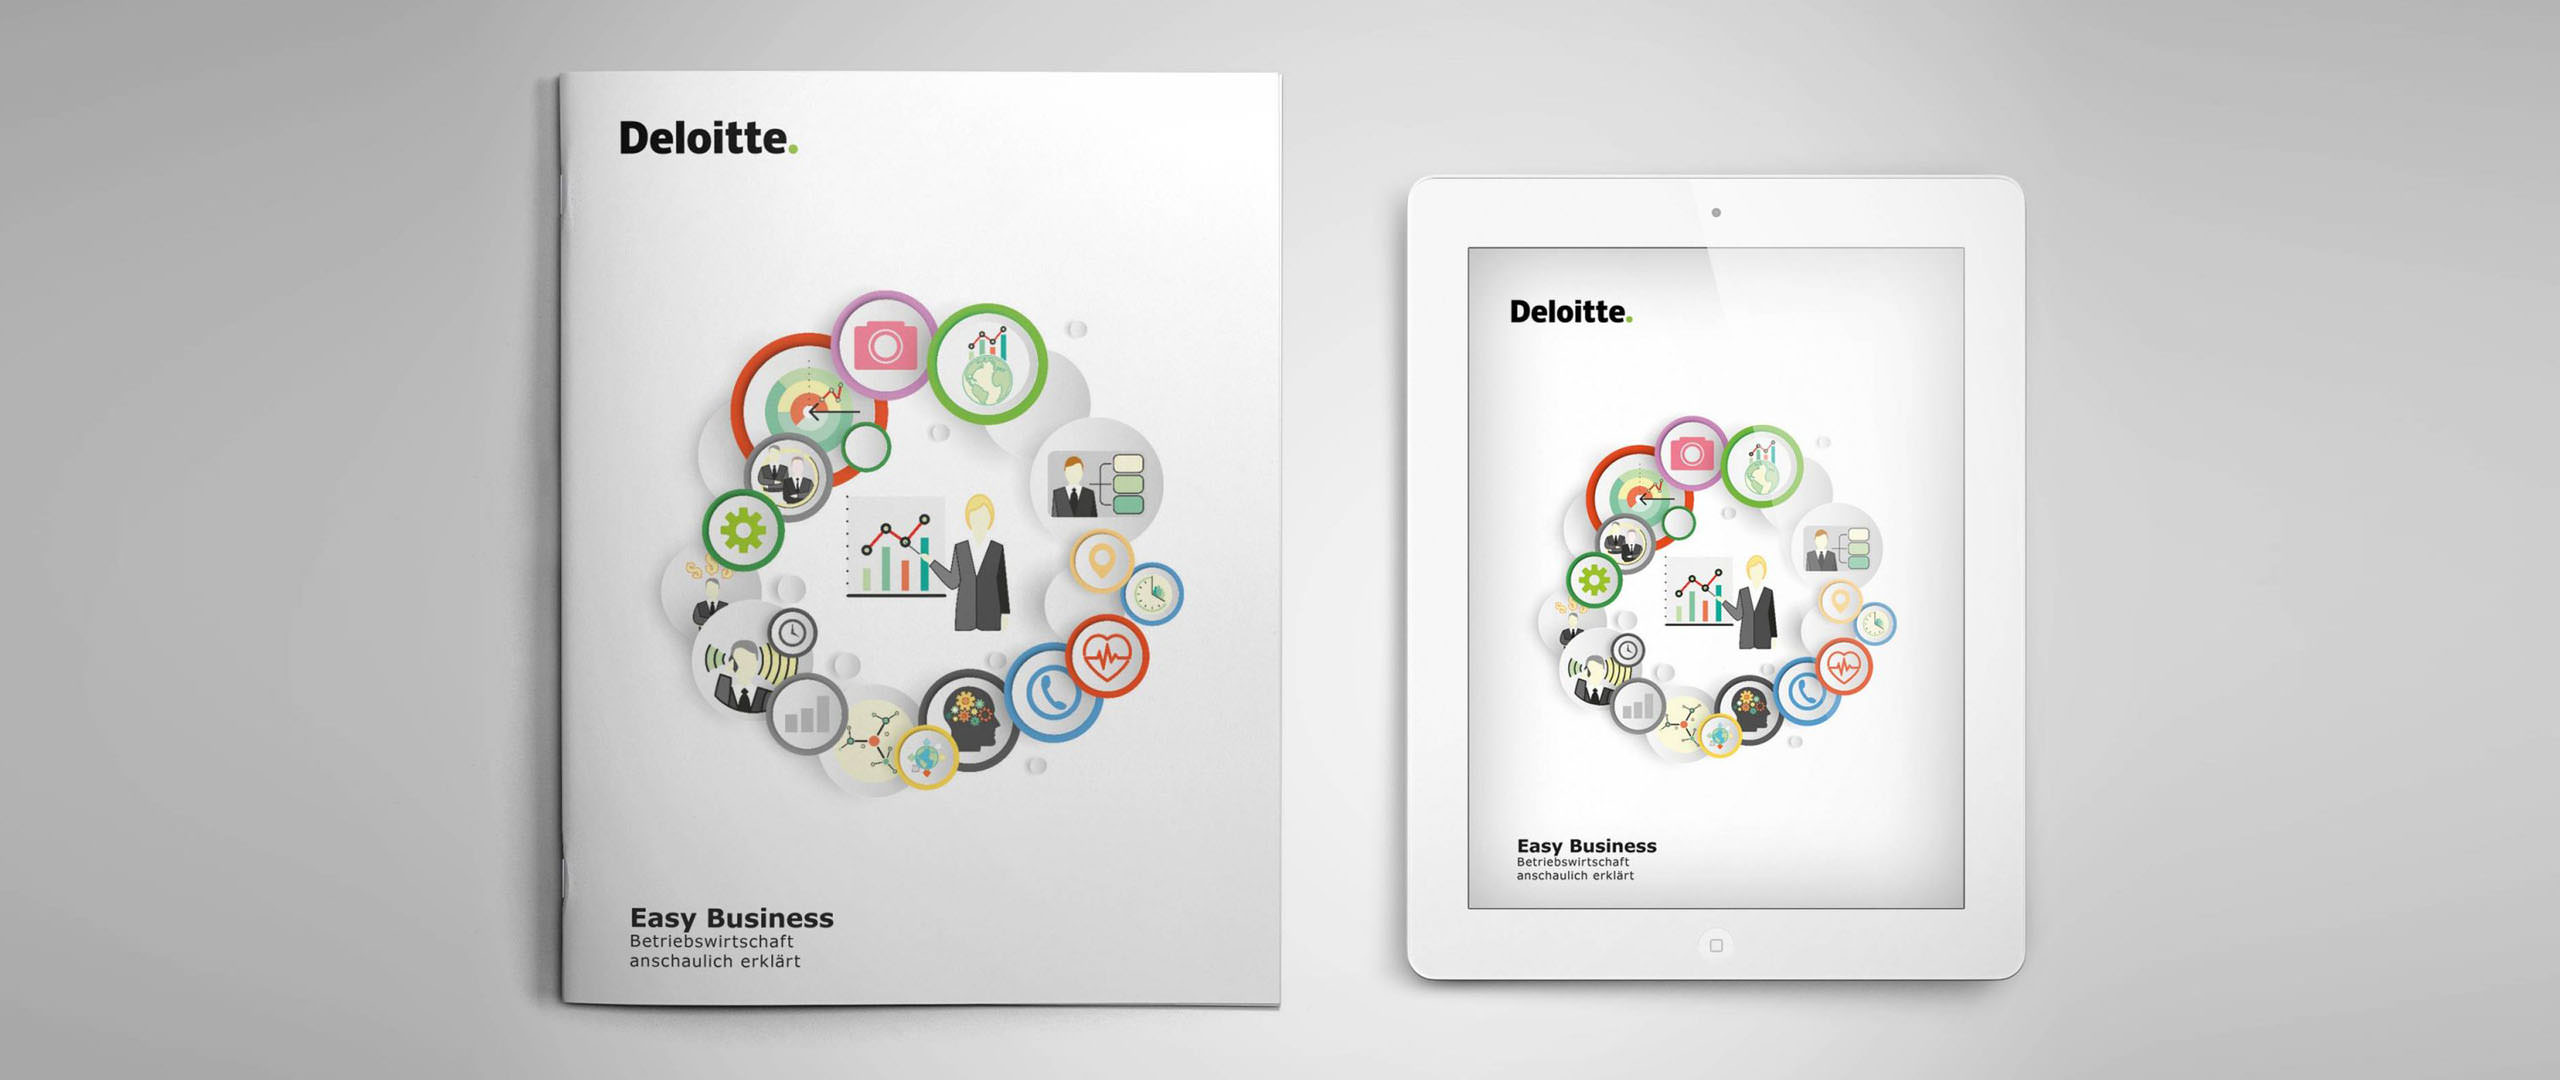 OOMPA Design - projekte - Deloitte.